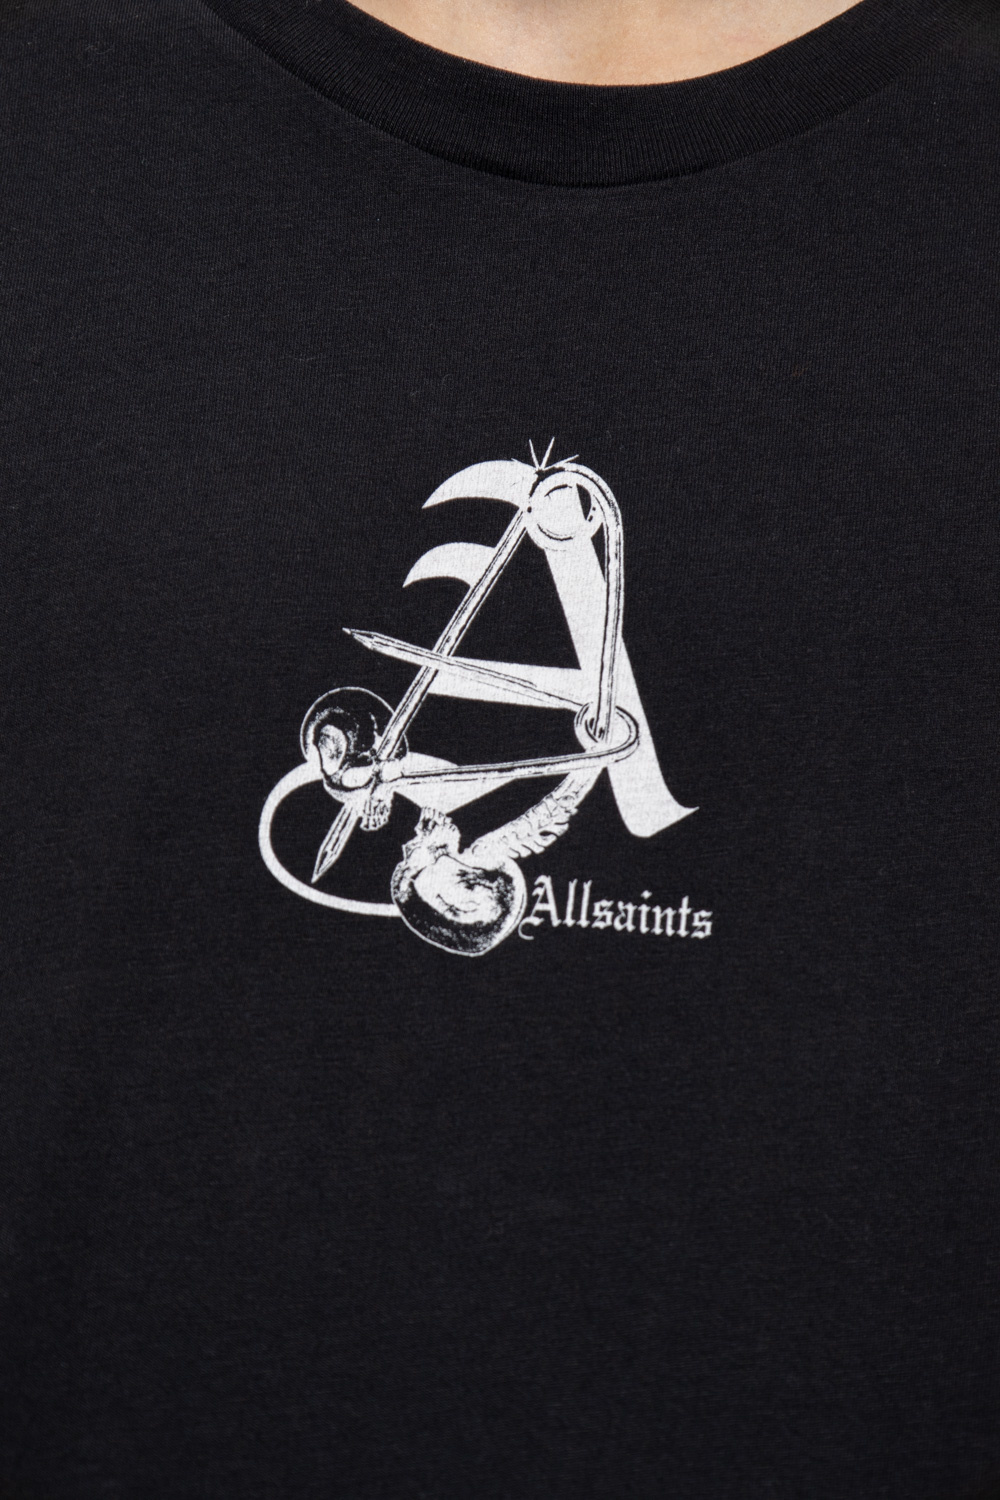 AllSaints 'Emblem' patterned shirt, Men's Clothing